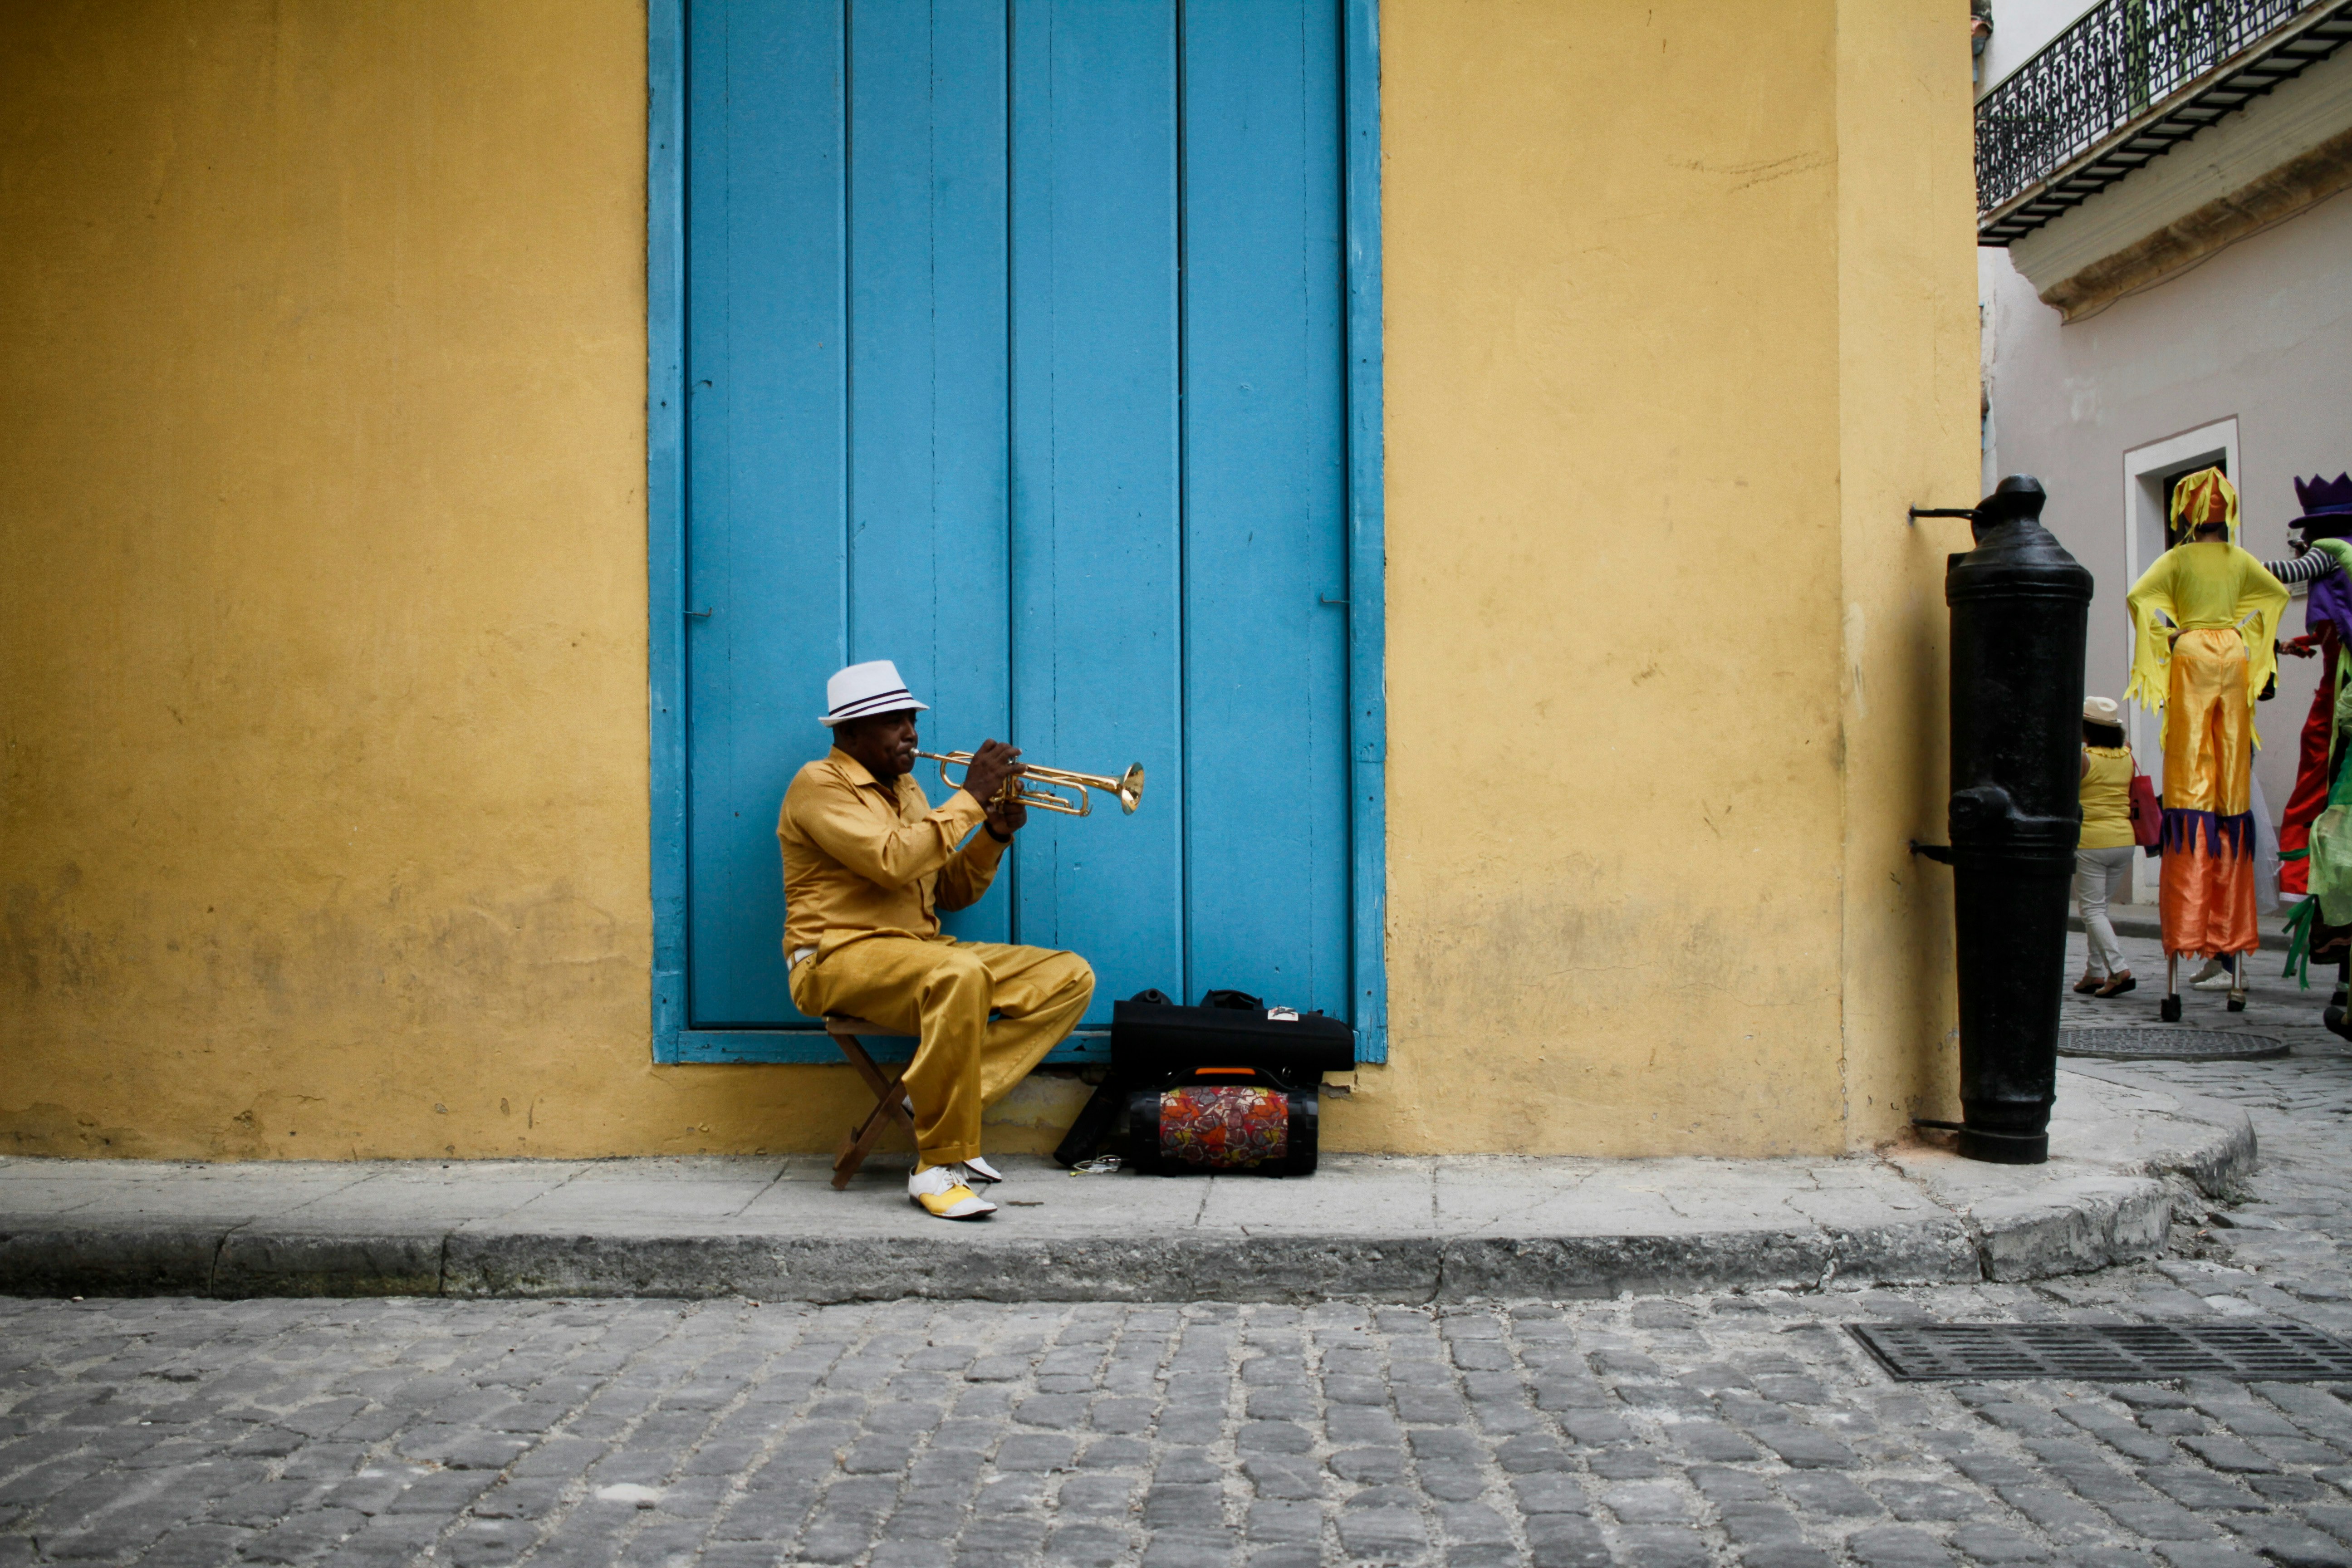 Exploring the streets of Havana.